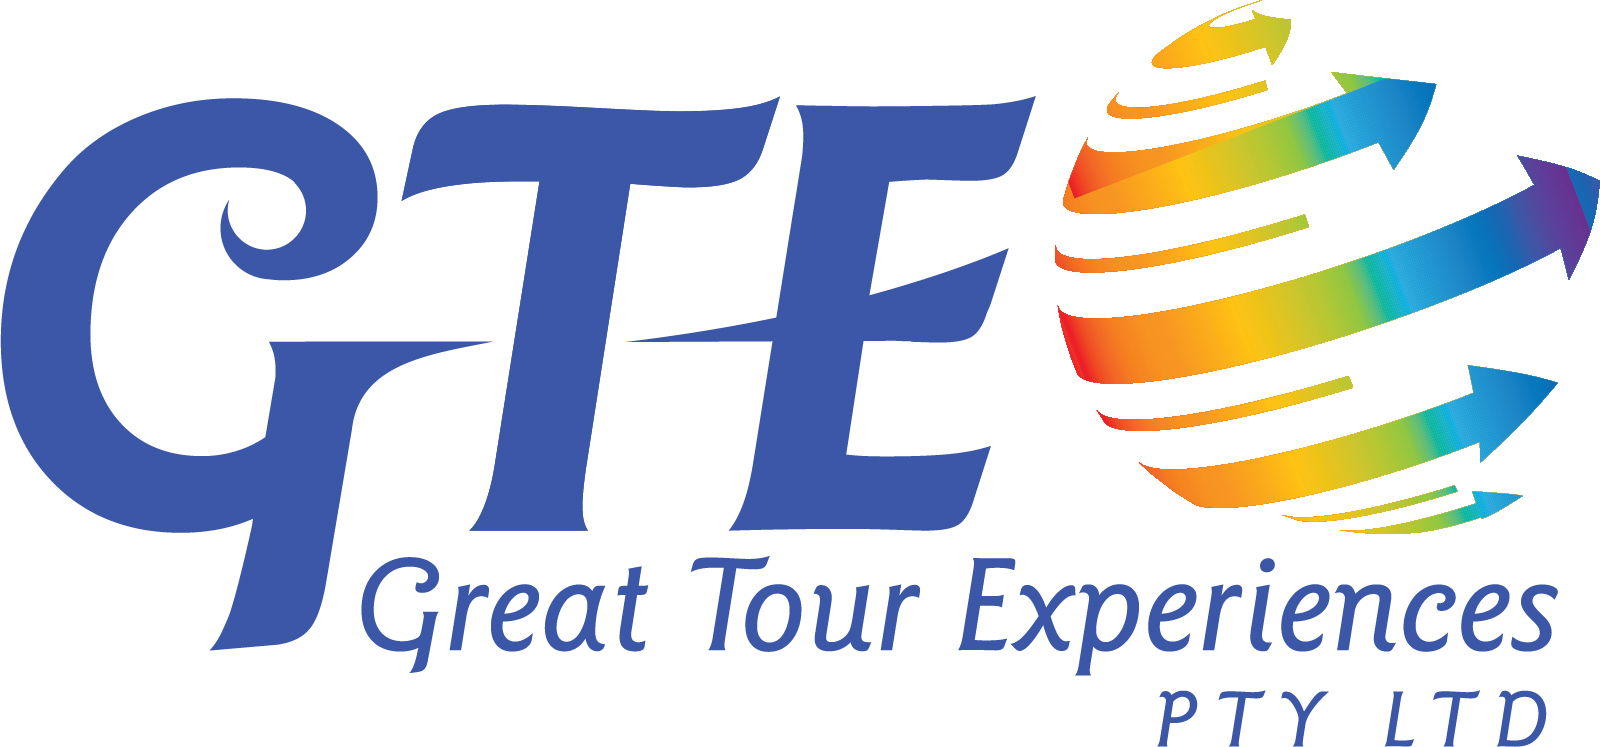 Great Tour Experiences 